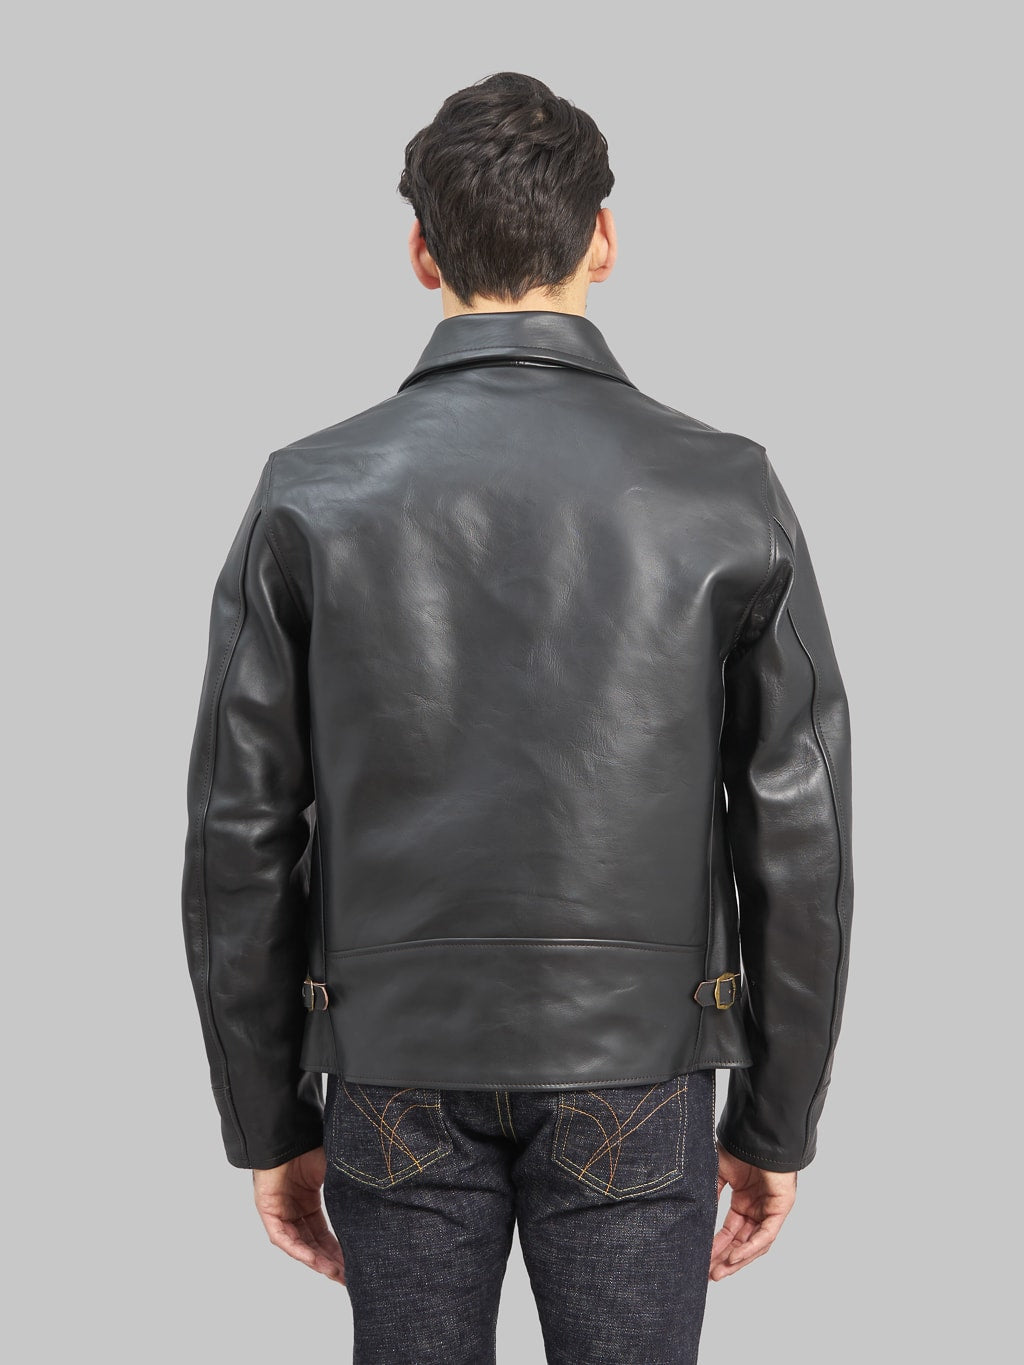 Trophy Clothing Humming Bird Horsehide leather Jacket Black  model back fit